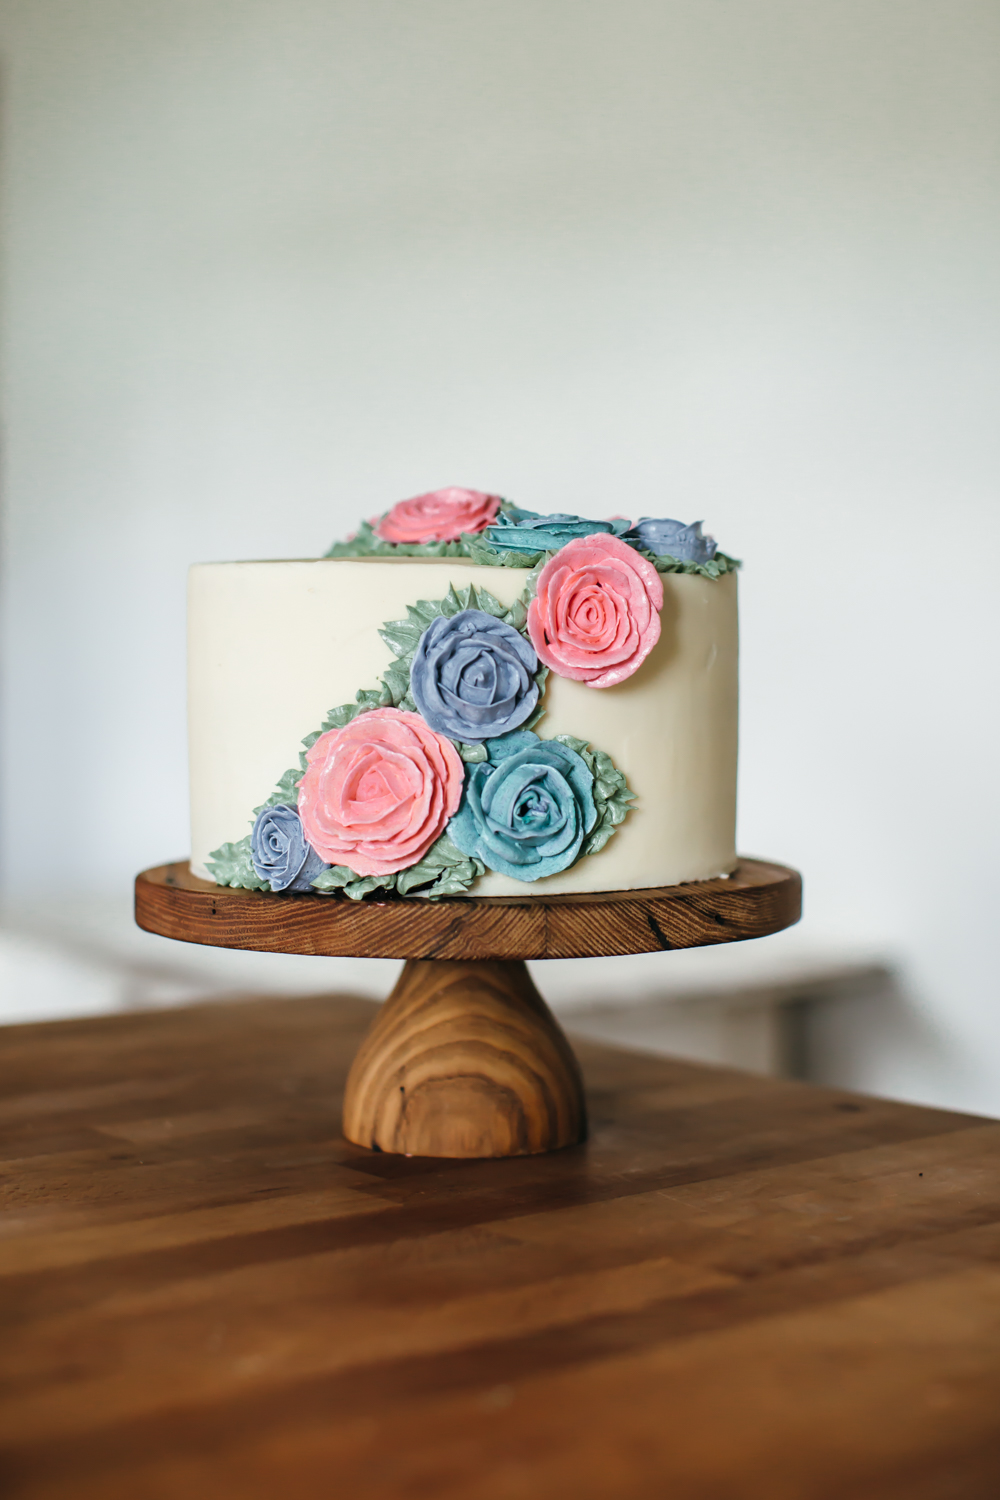 Drip cake decorating: Make a gorgeous spring dessert - Think.Make.Share.